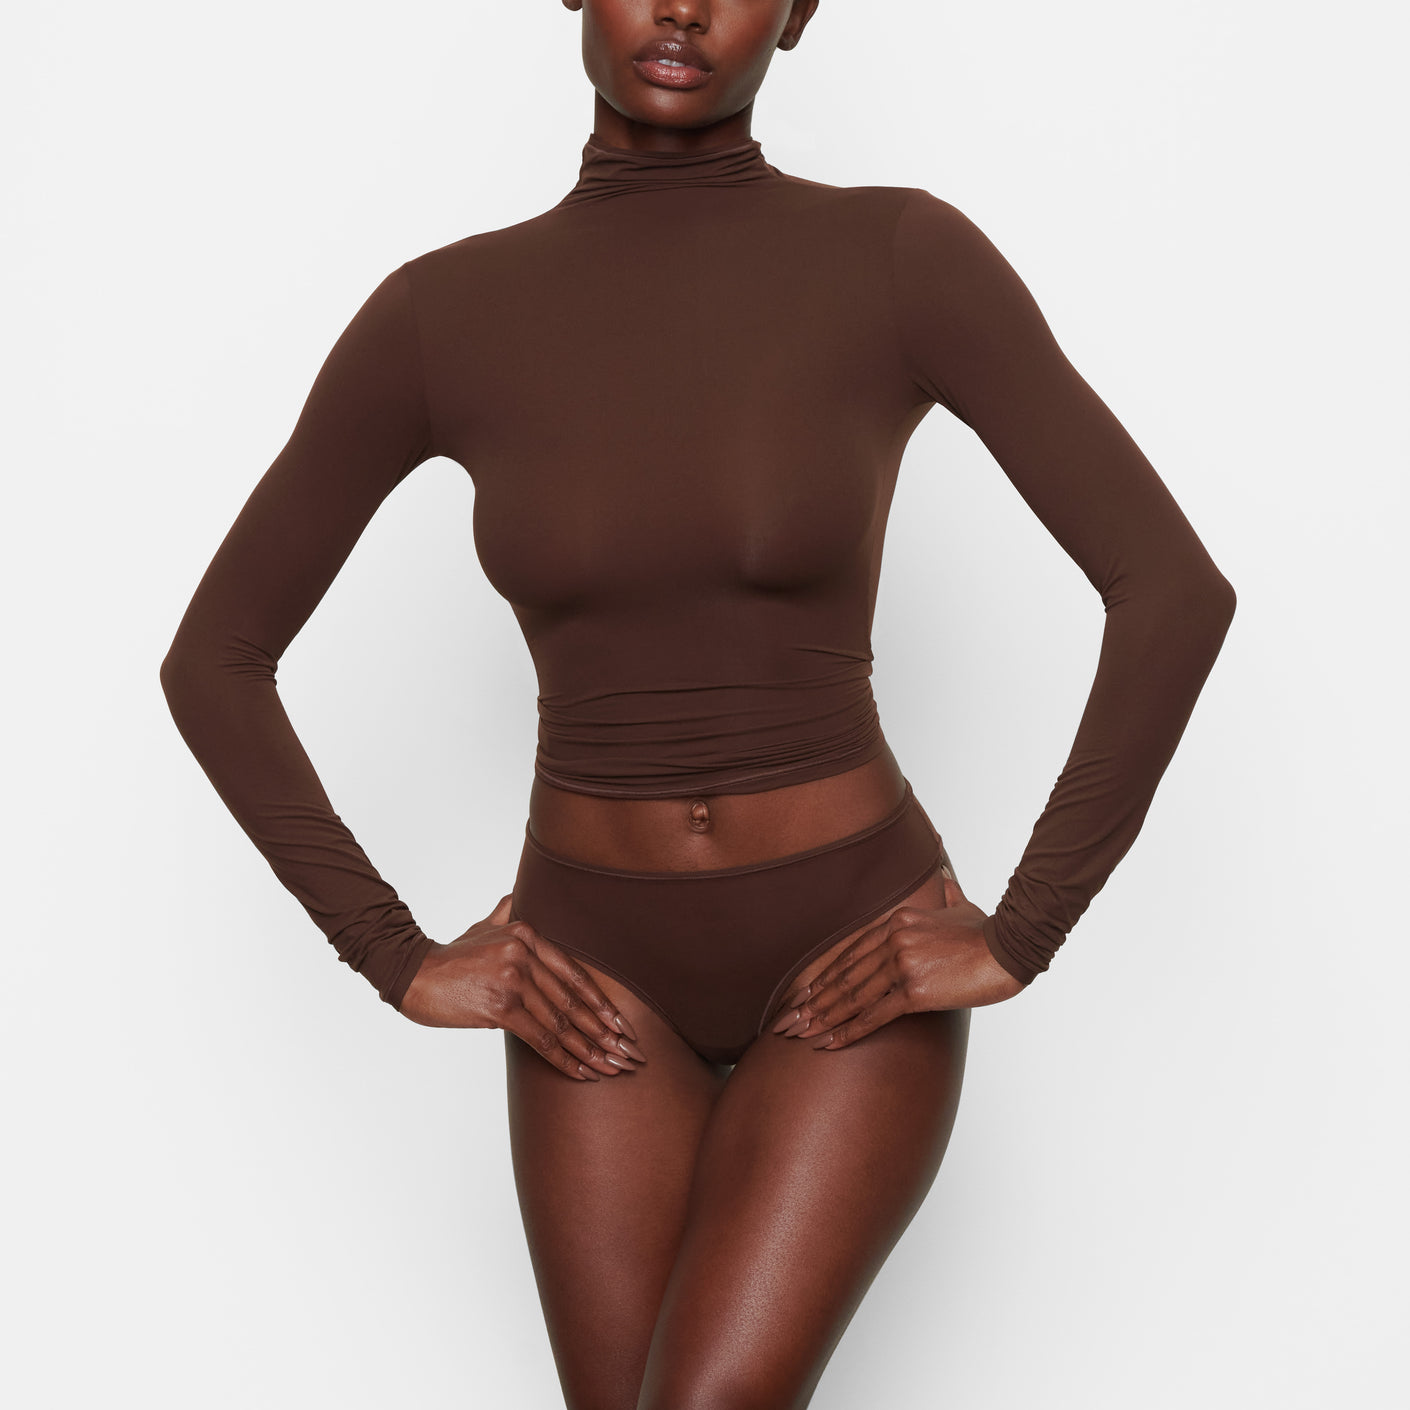 Uniqlo Body Shaper Seamless Bra Sleeveless Top (S), Women's Fashion, New  Undergarments & Loungewear on Carousell